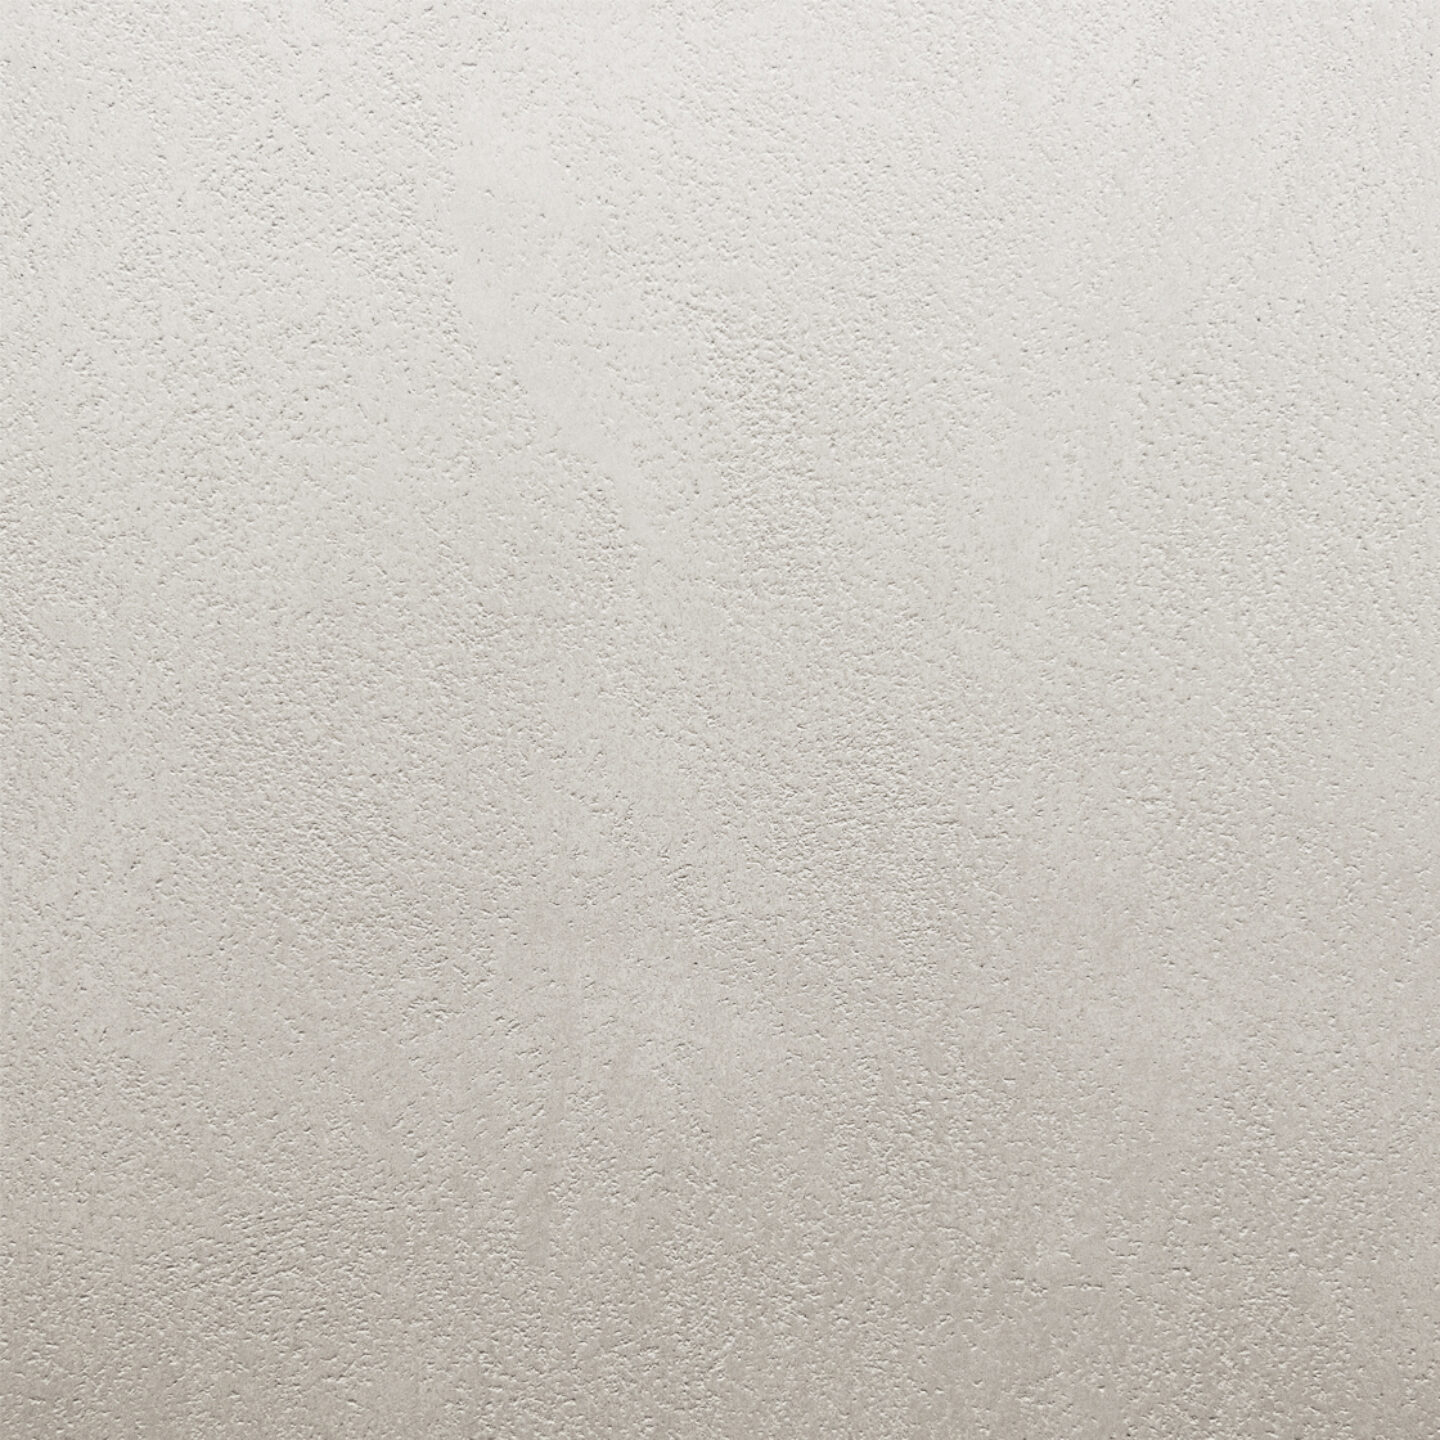 Close up of Armourcoat leatherstone exterior polished plaster finish - 10